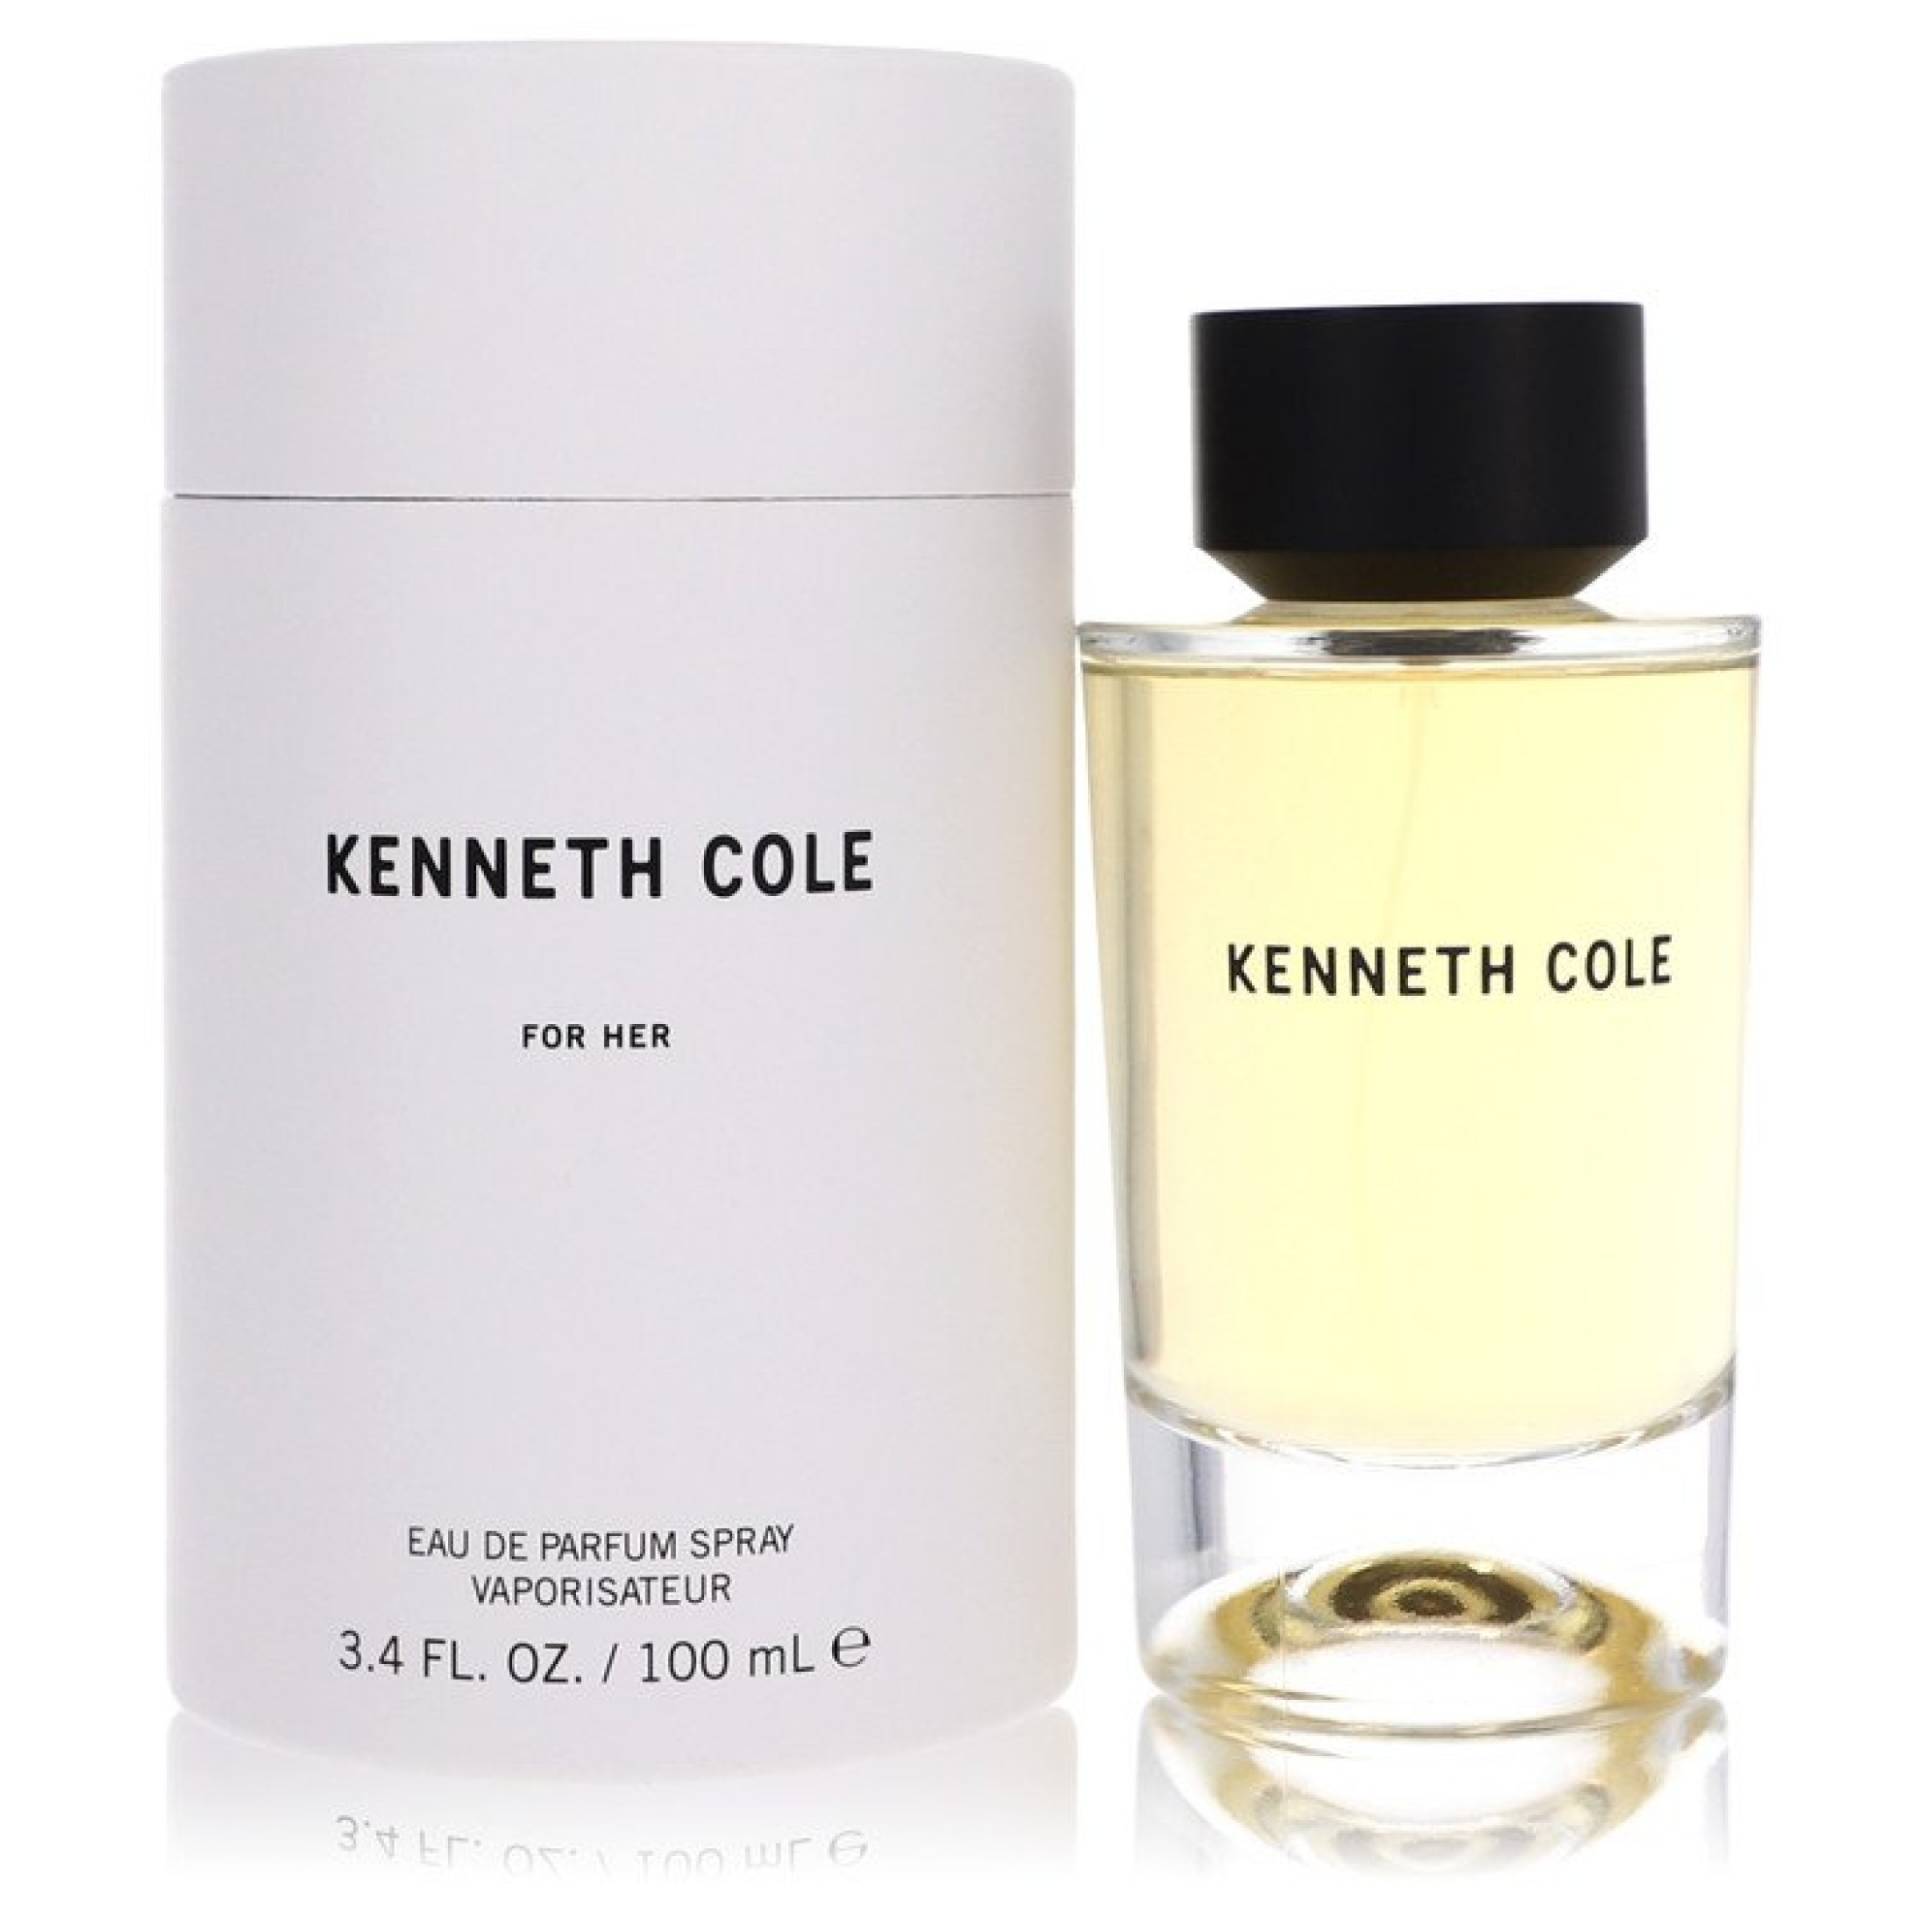 Kenneth Cole For Her Eau De Parfum Spray 100 ml von Kenneth Cole